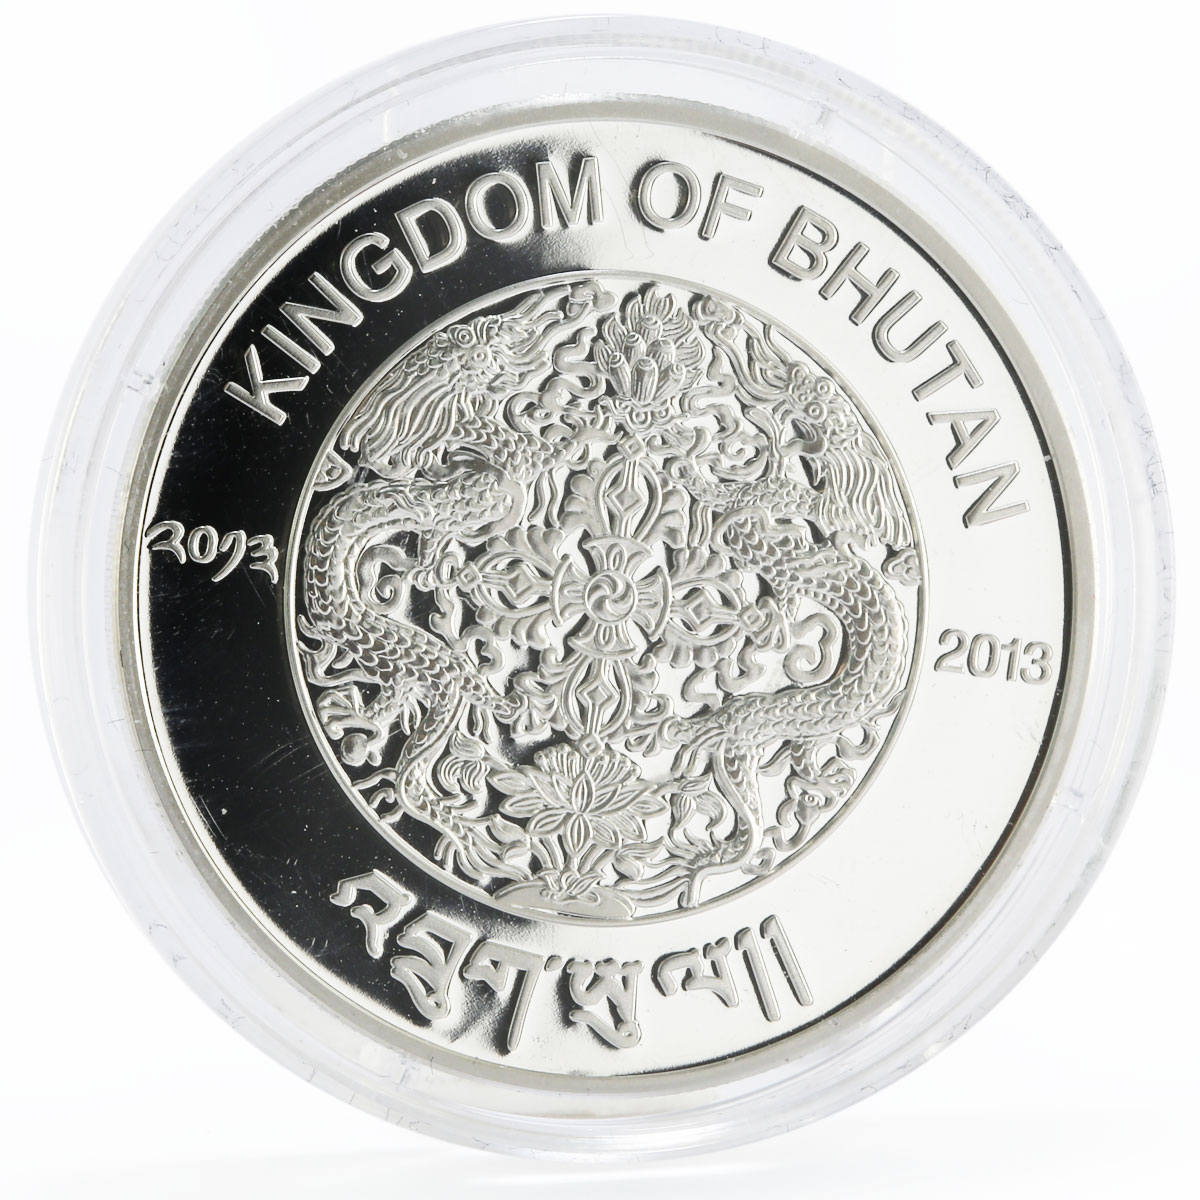 Bhutan 300 ngultrums Kalka - Shimla Train on the Railway silver coin 2013